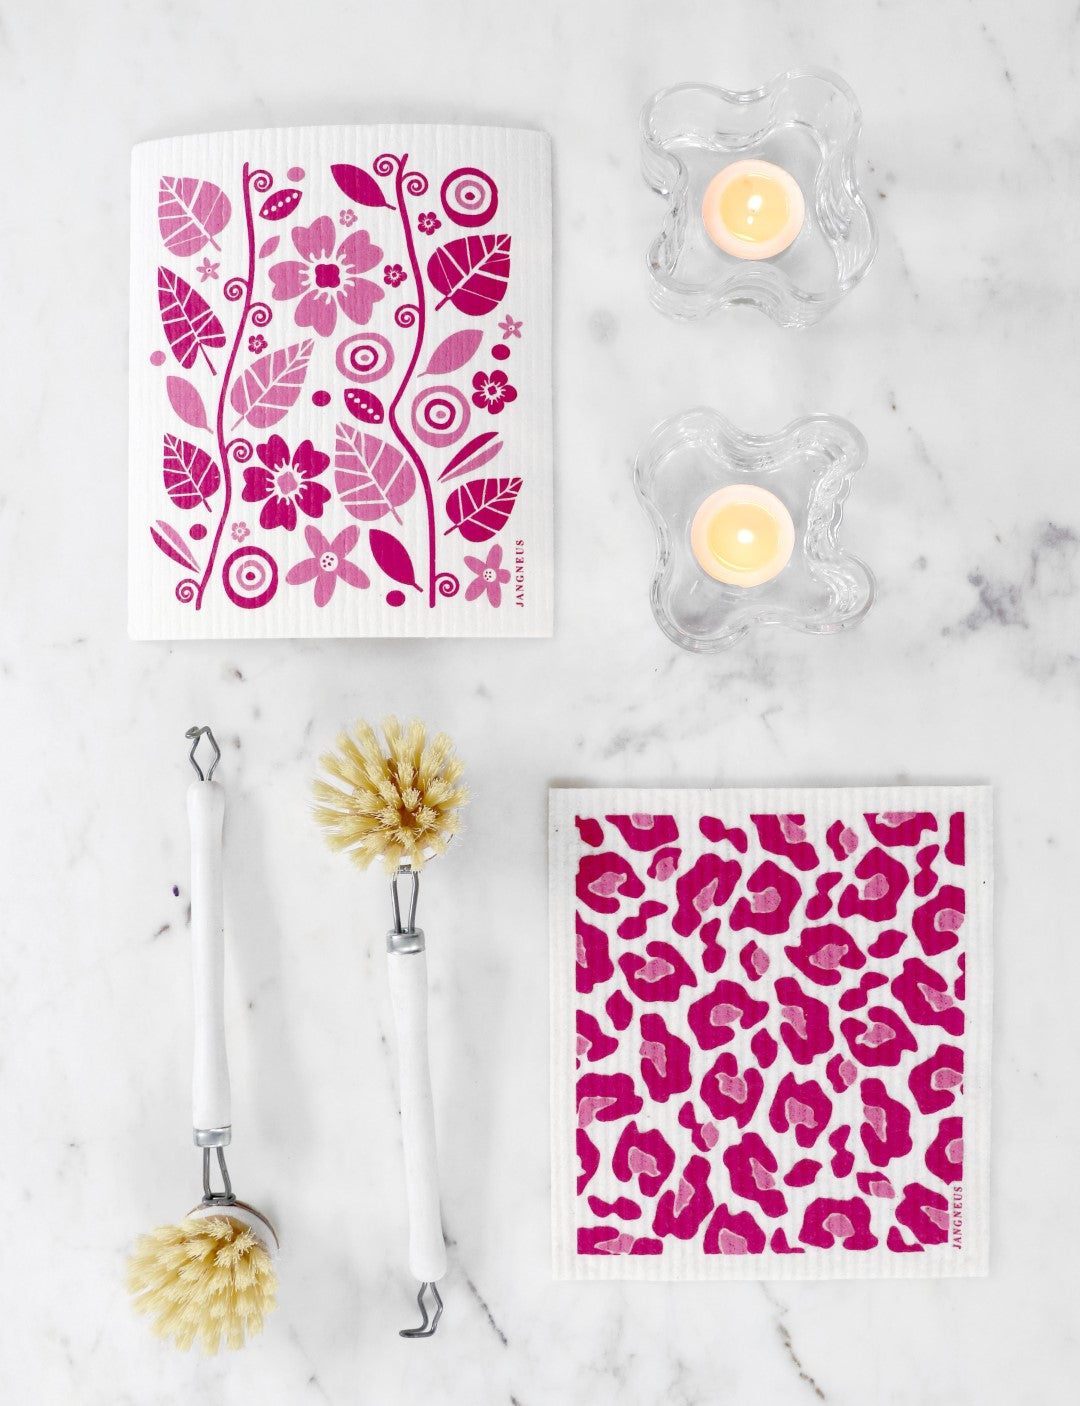 Leopard Print Dishcloth - Pink